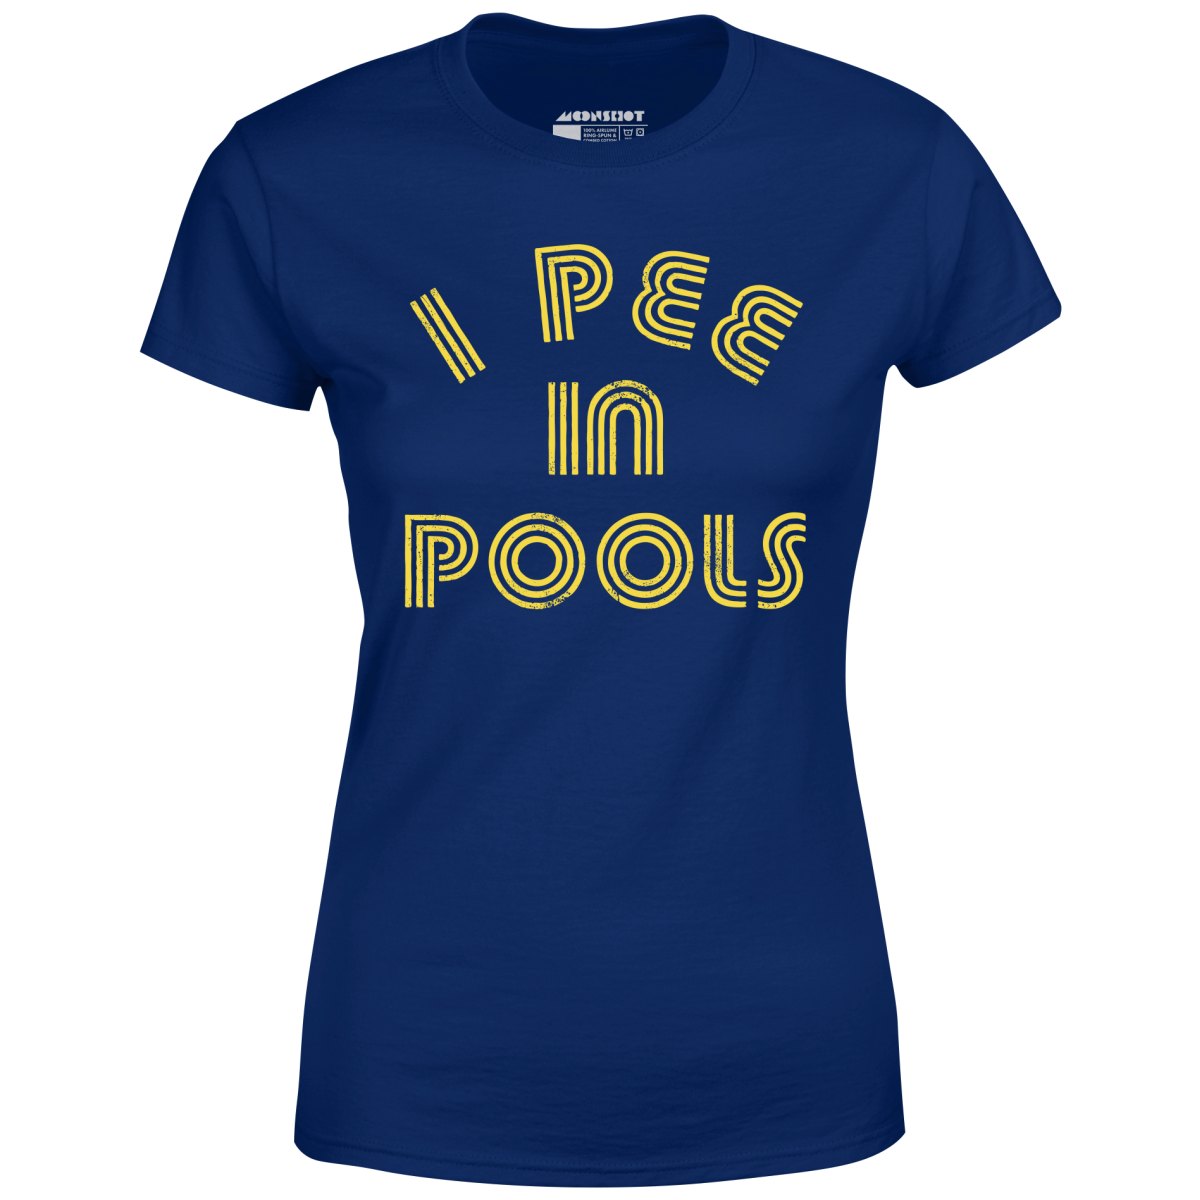 I Pee in Pools - Women's T-Shirt